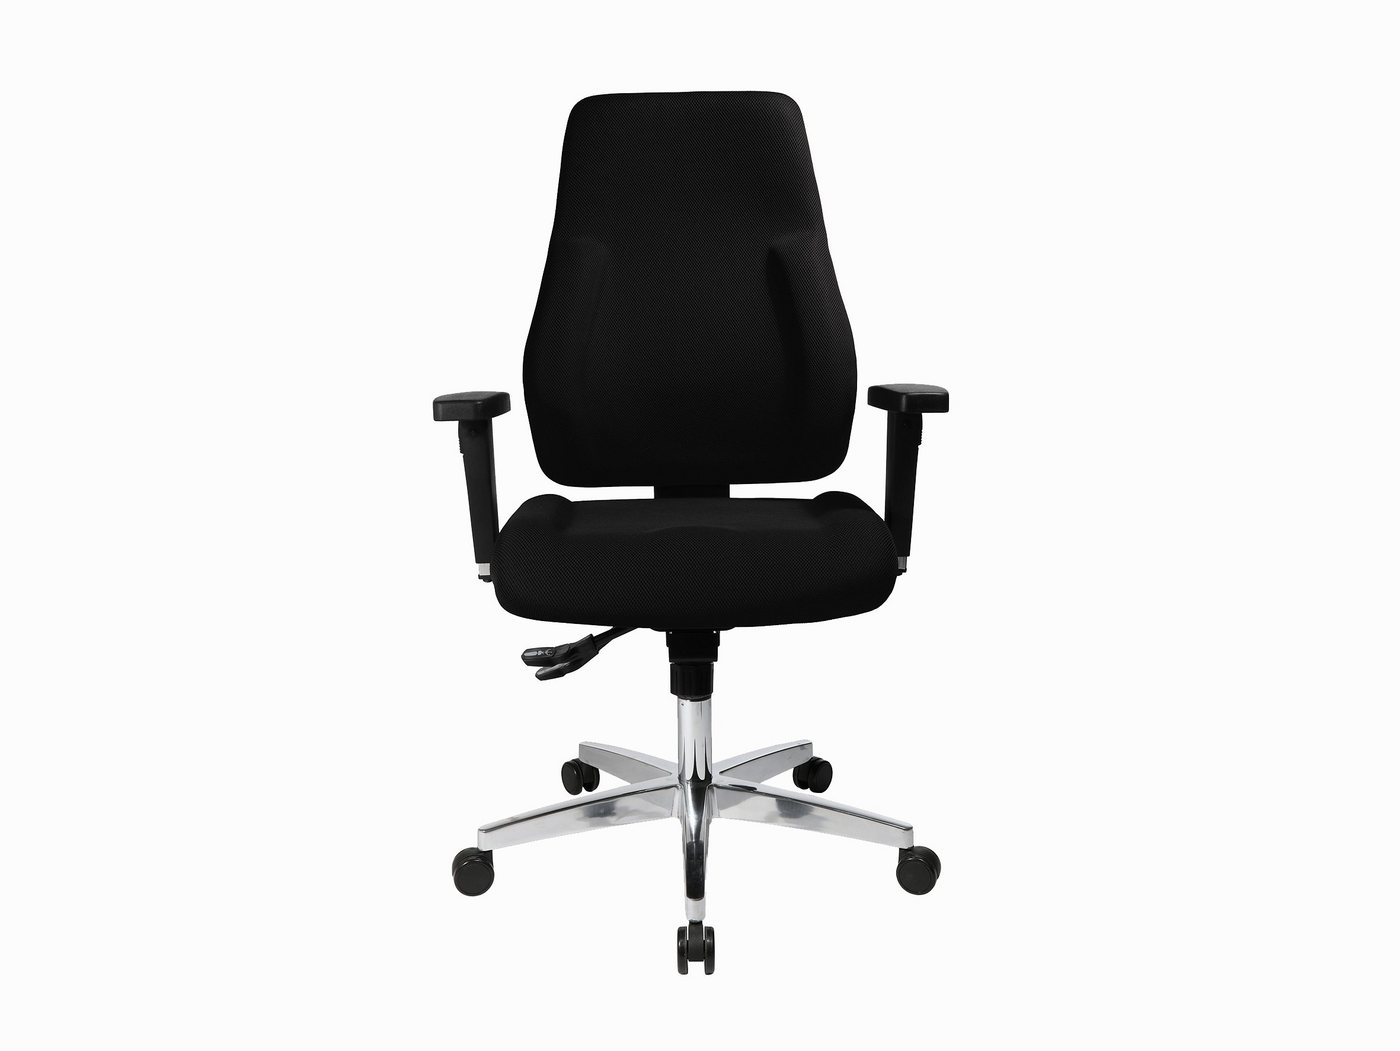 Moebel-Eins Stuhl P91 Drehstuhl, Material Stoff/Aluminium, schwarz, P91 Drehstuhl, Material Stoff/Aluminium, schwarz von Moebel-Eins